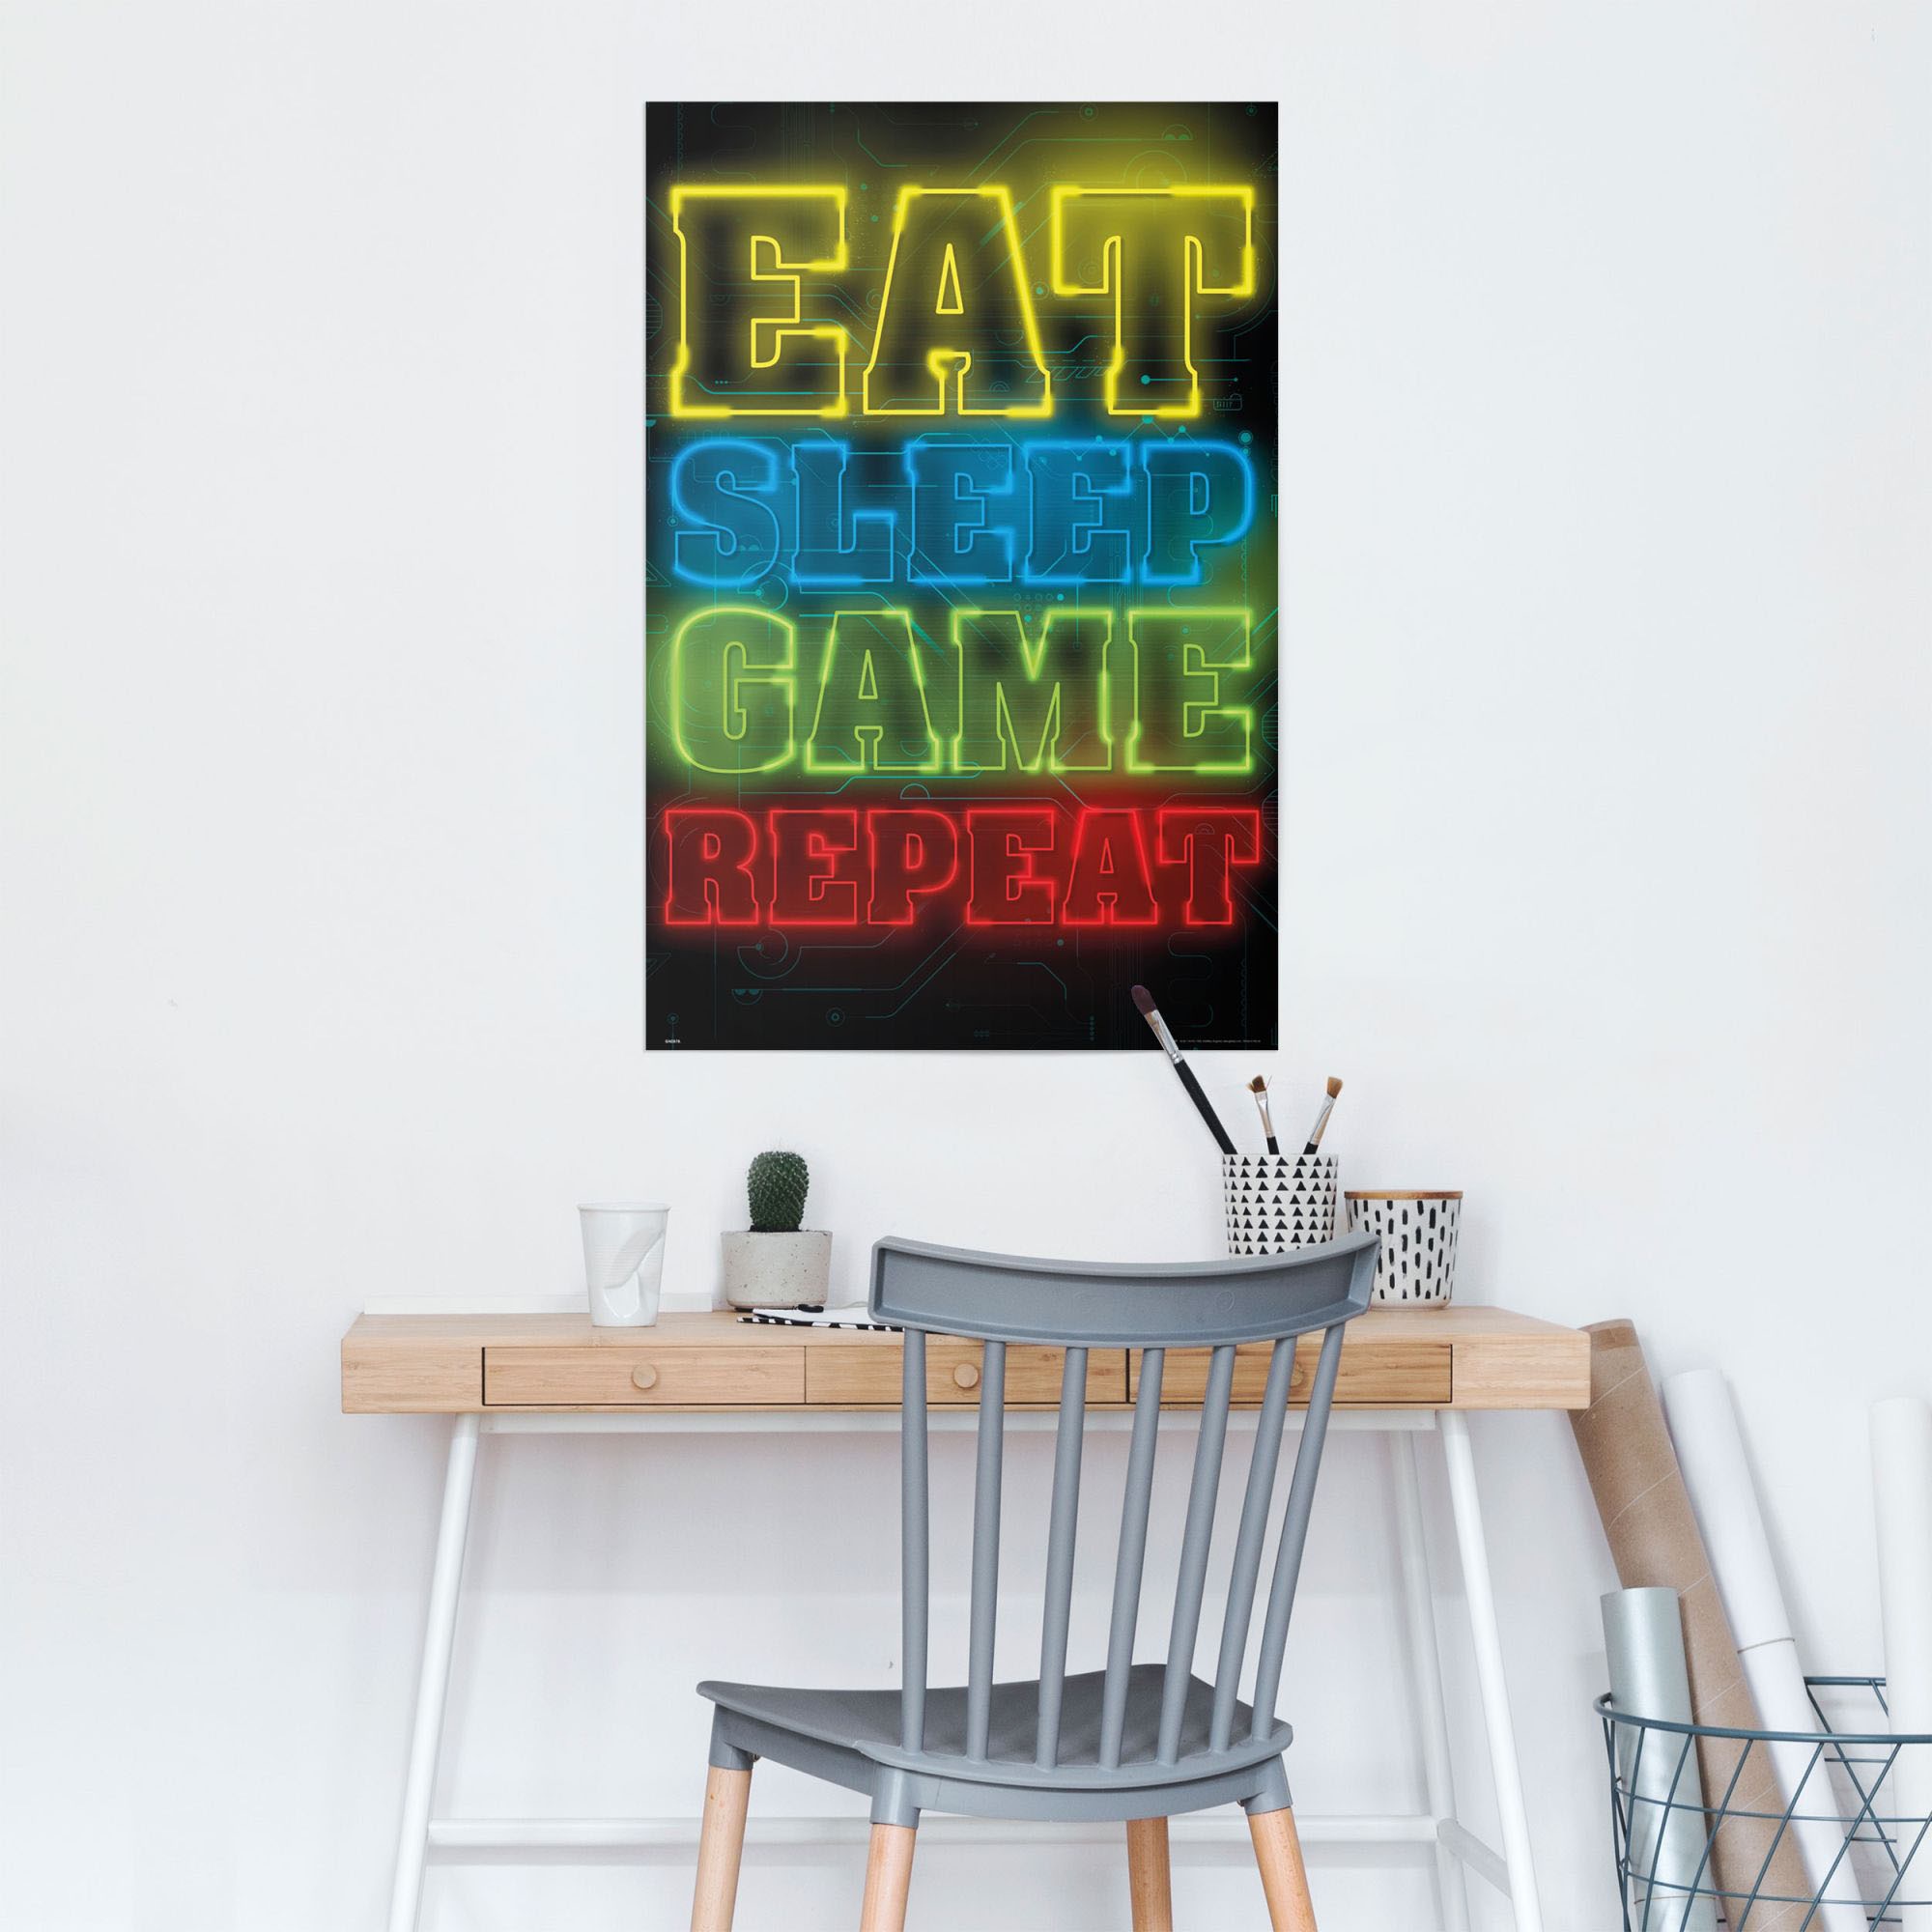 Reinders! bequem Spiele, Eat Poster repeat«, »Poster sleep kaufen St.) game Zocken (1